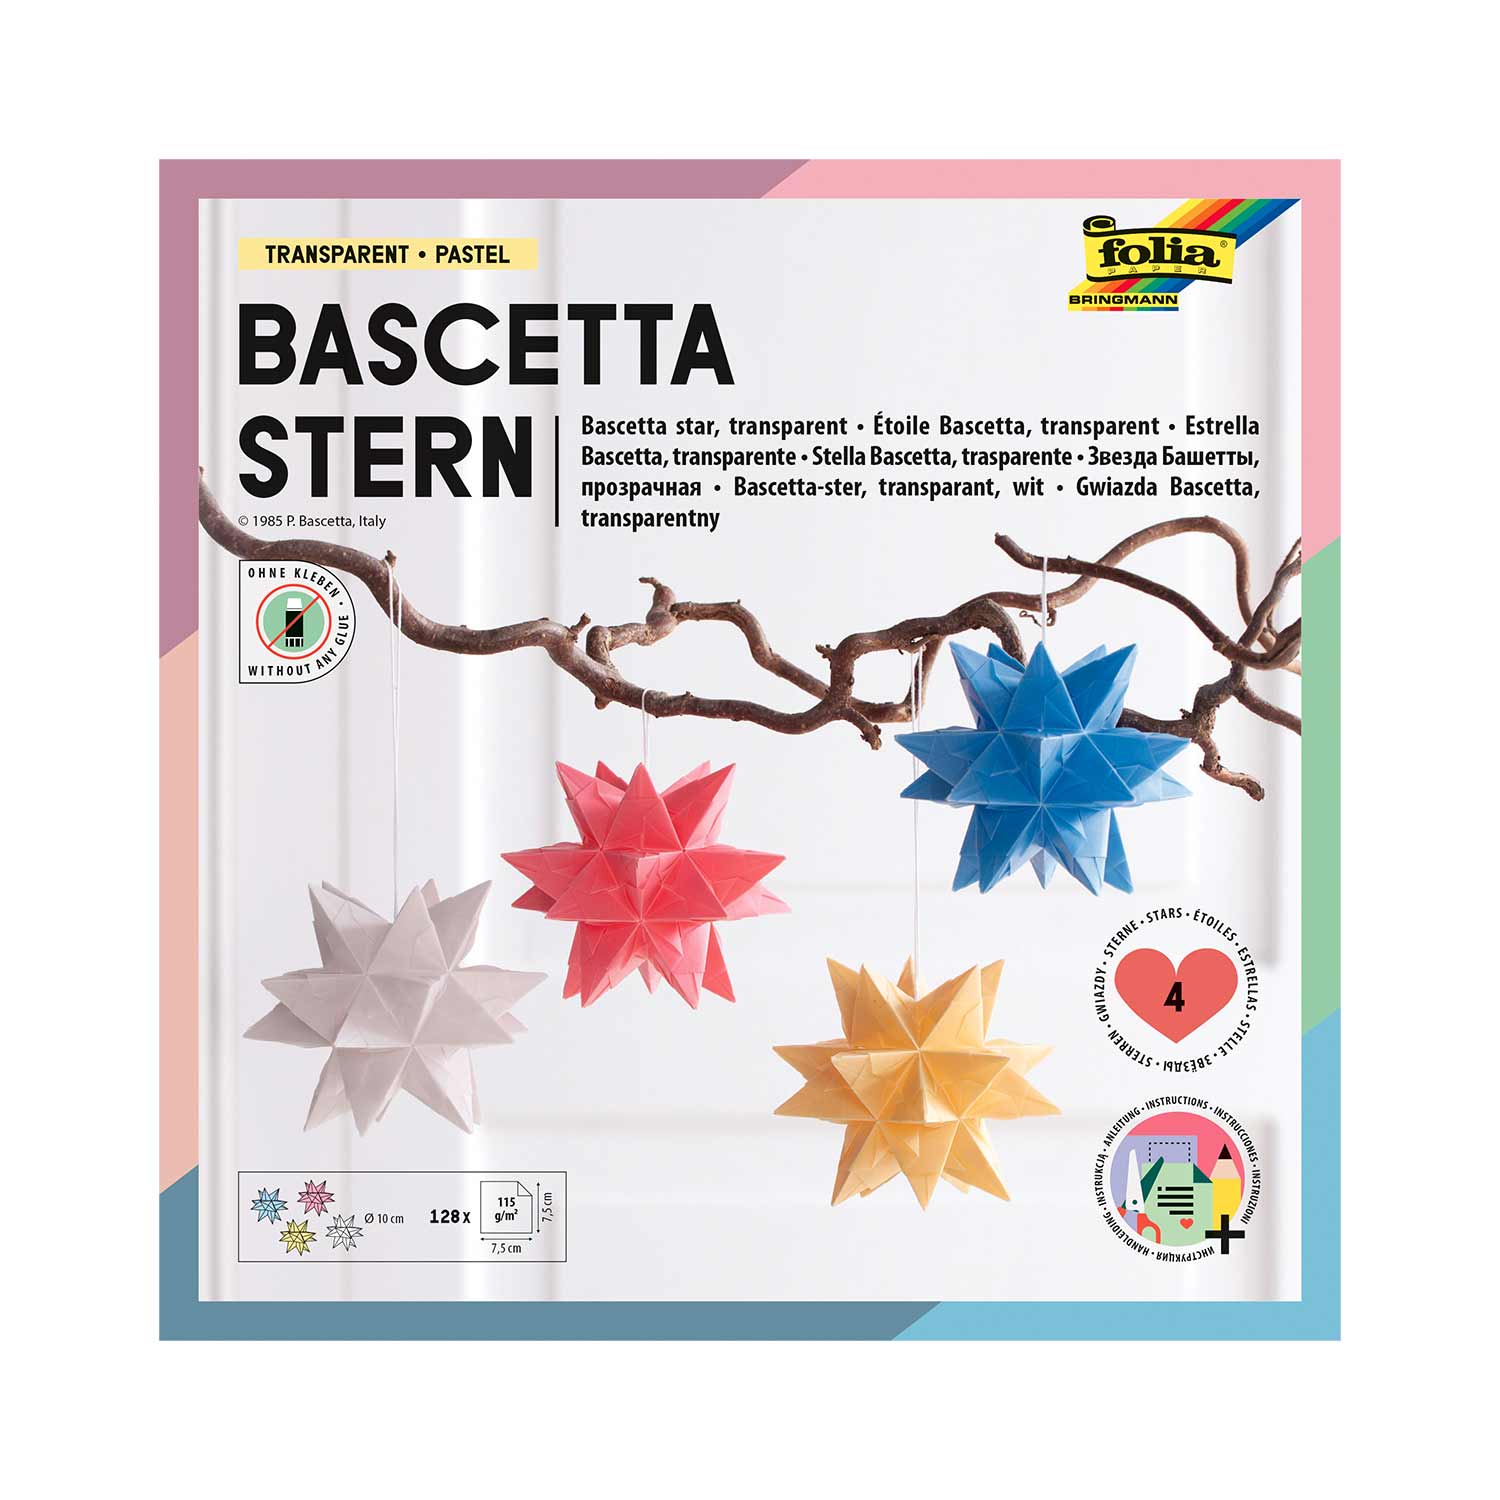 Bascetta-Stern Bastelset 128 Blatt 7,5 x 7,5 cm Transparentpapier pastell